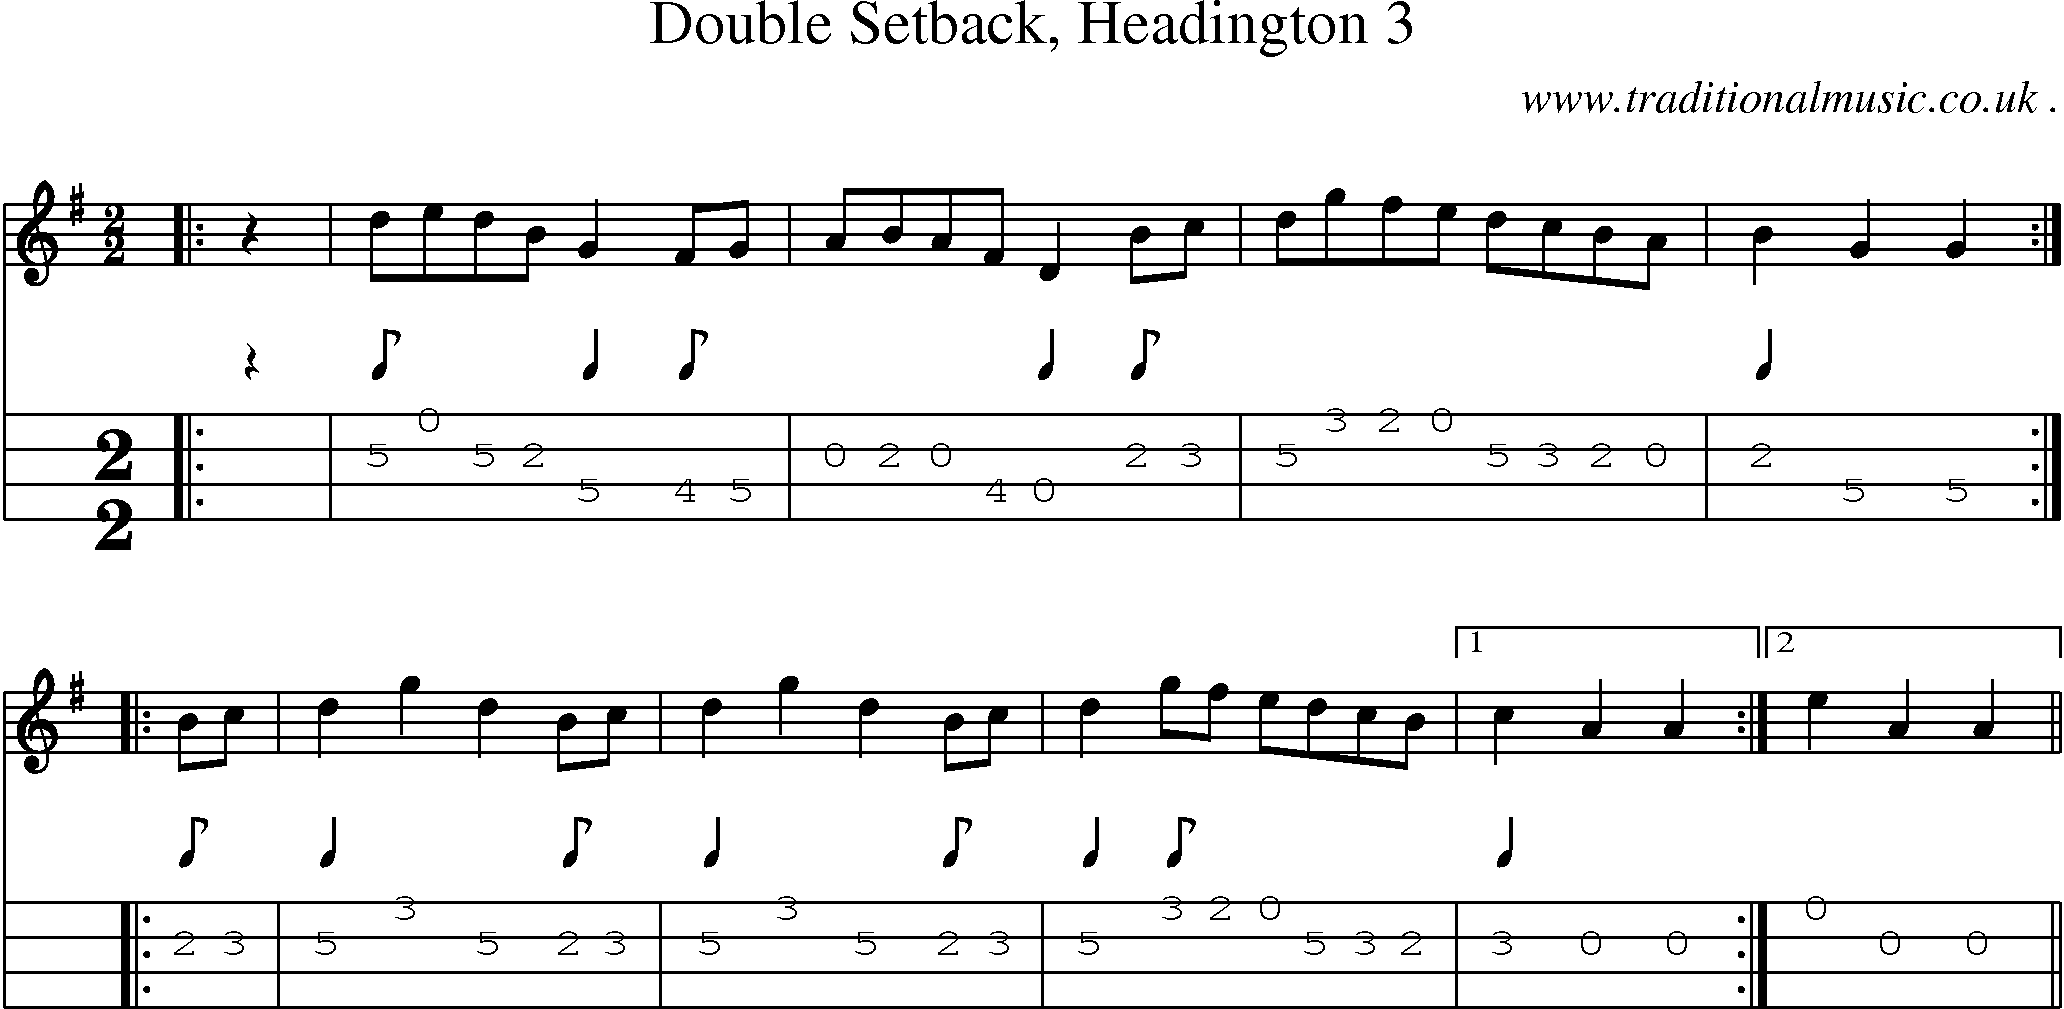 Sheet-Music and Mandolin Tabs for Double Setback Headington 3